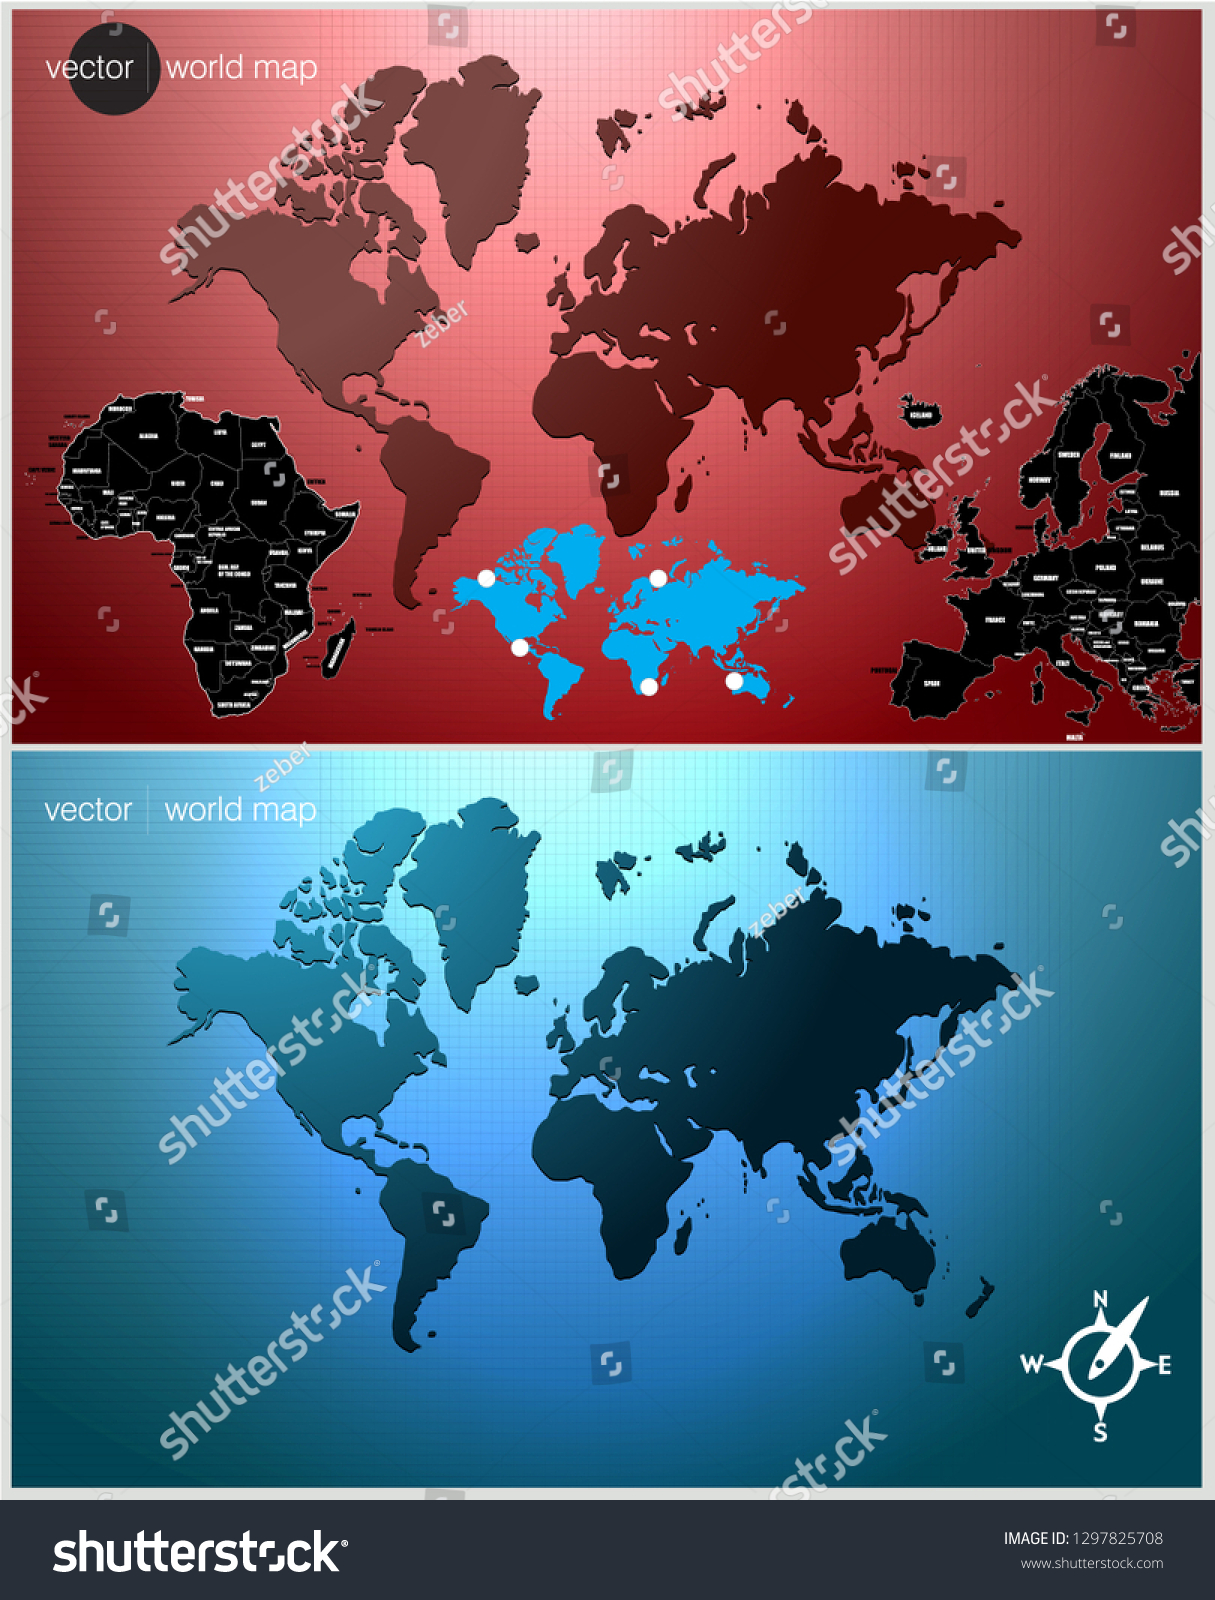 World Map Vector Illustration Royalty Free Stock Vector 1297825708 